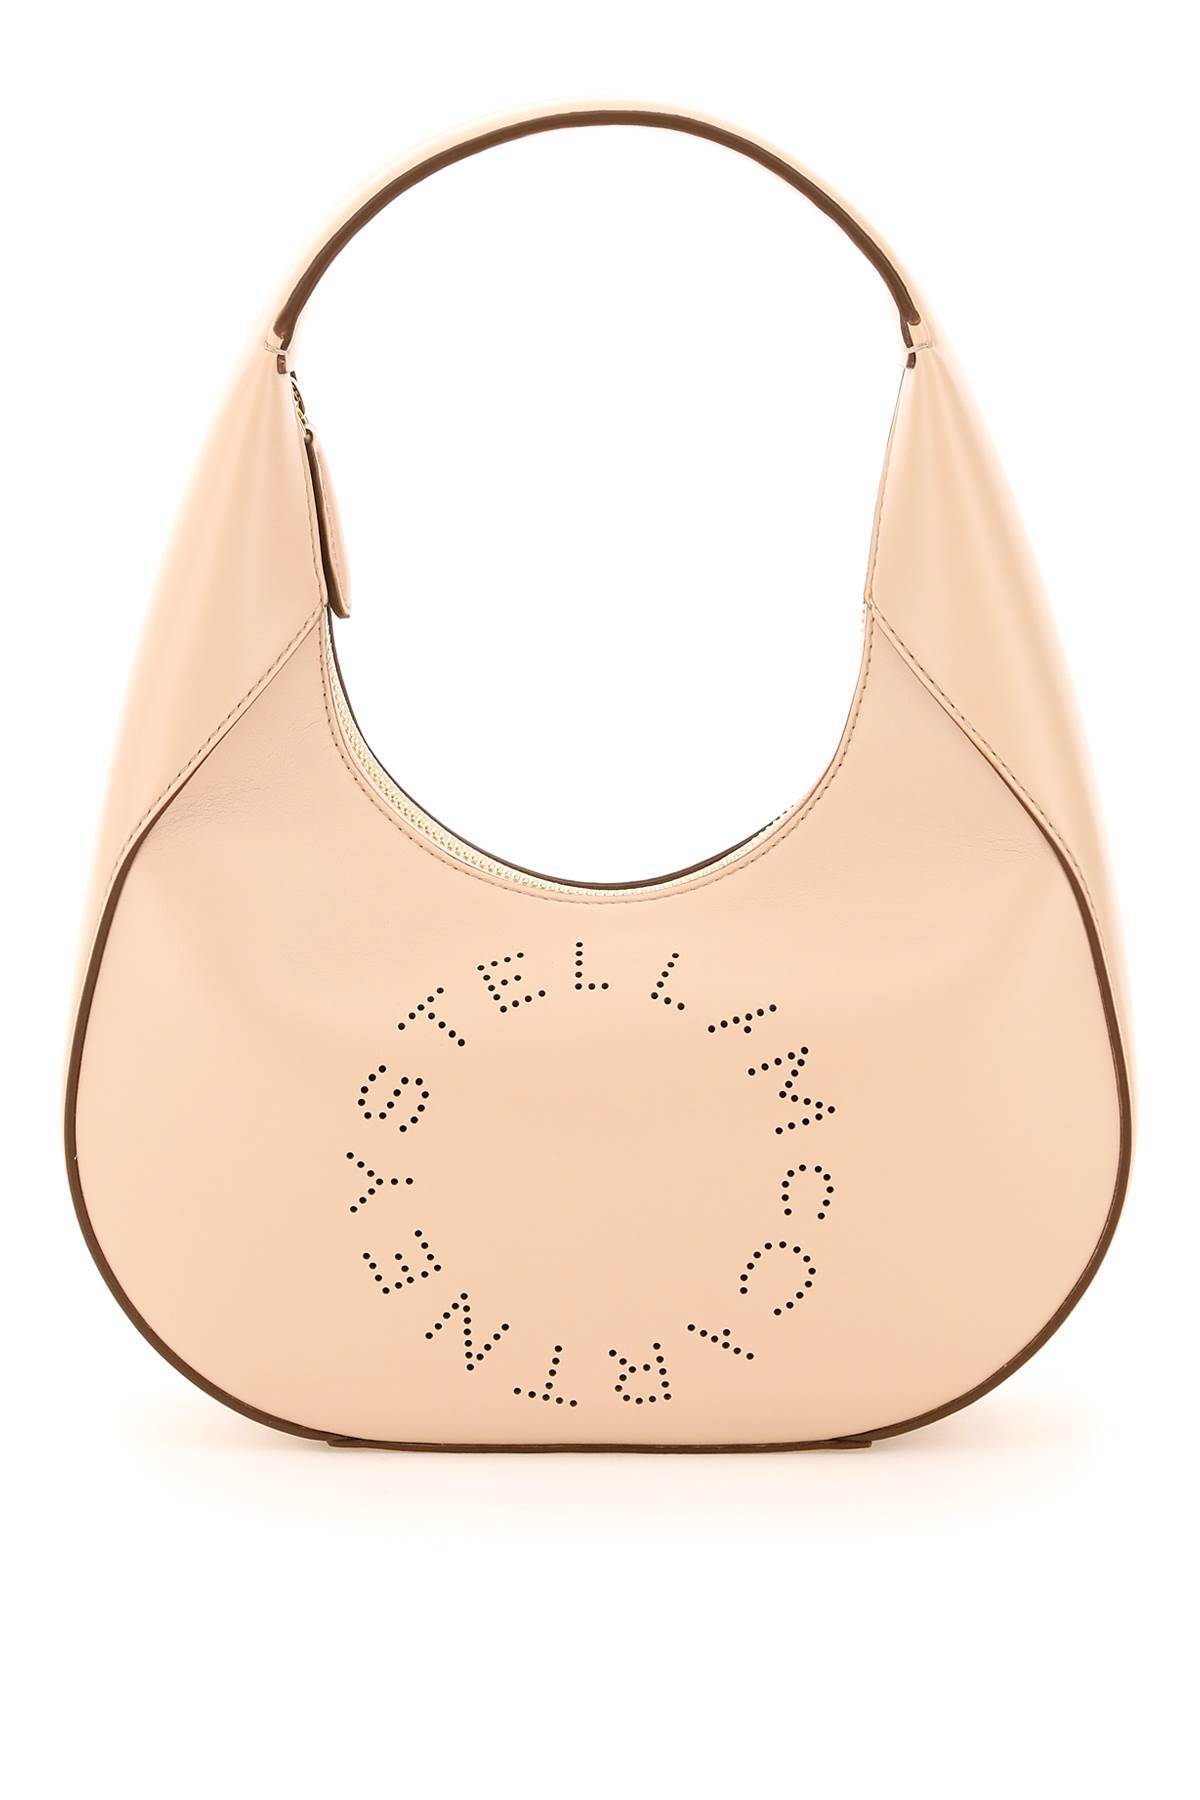 Stella McCartney Small Hobo Bag With Logo in blush